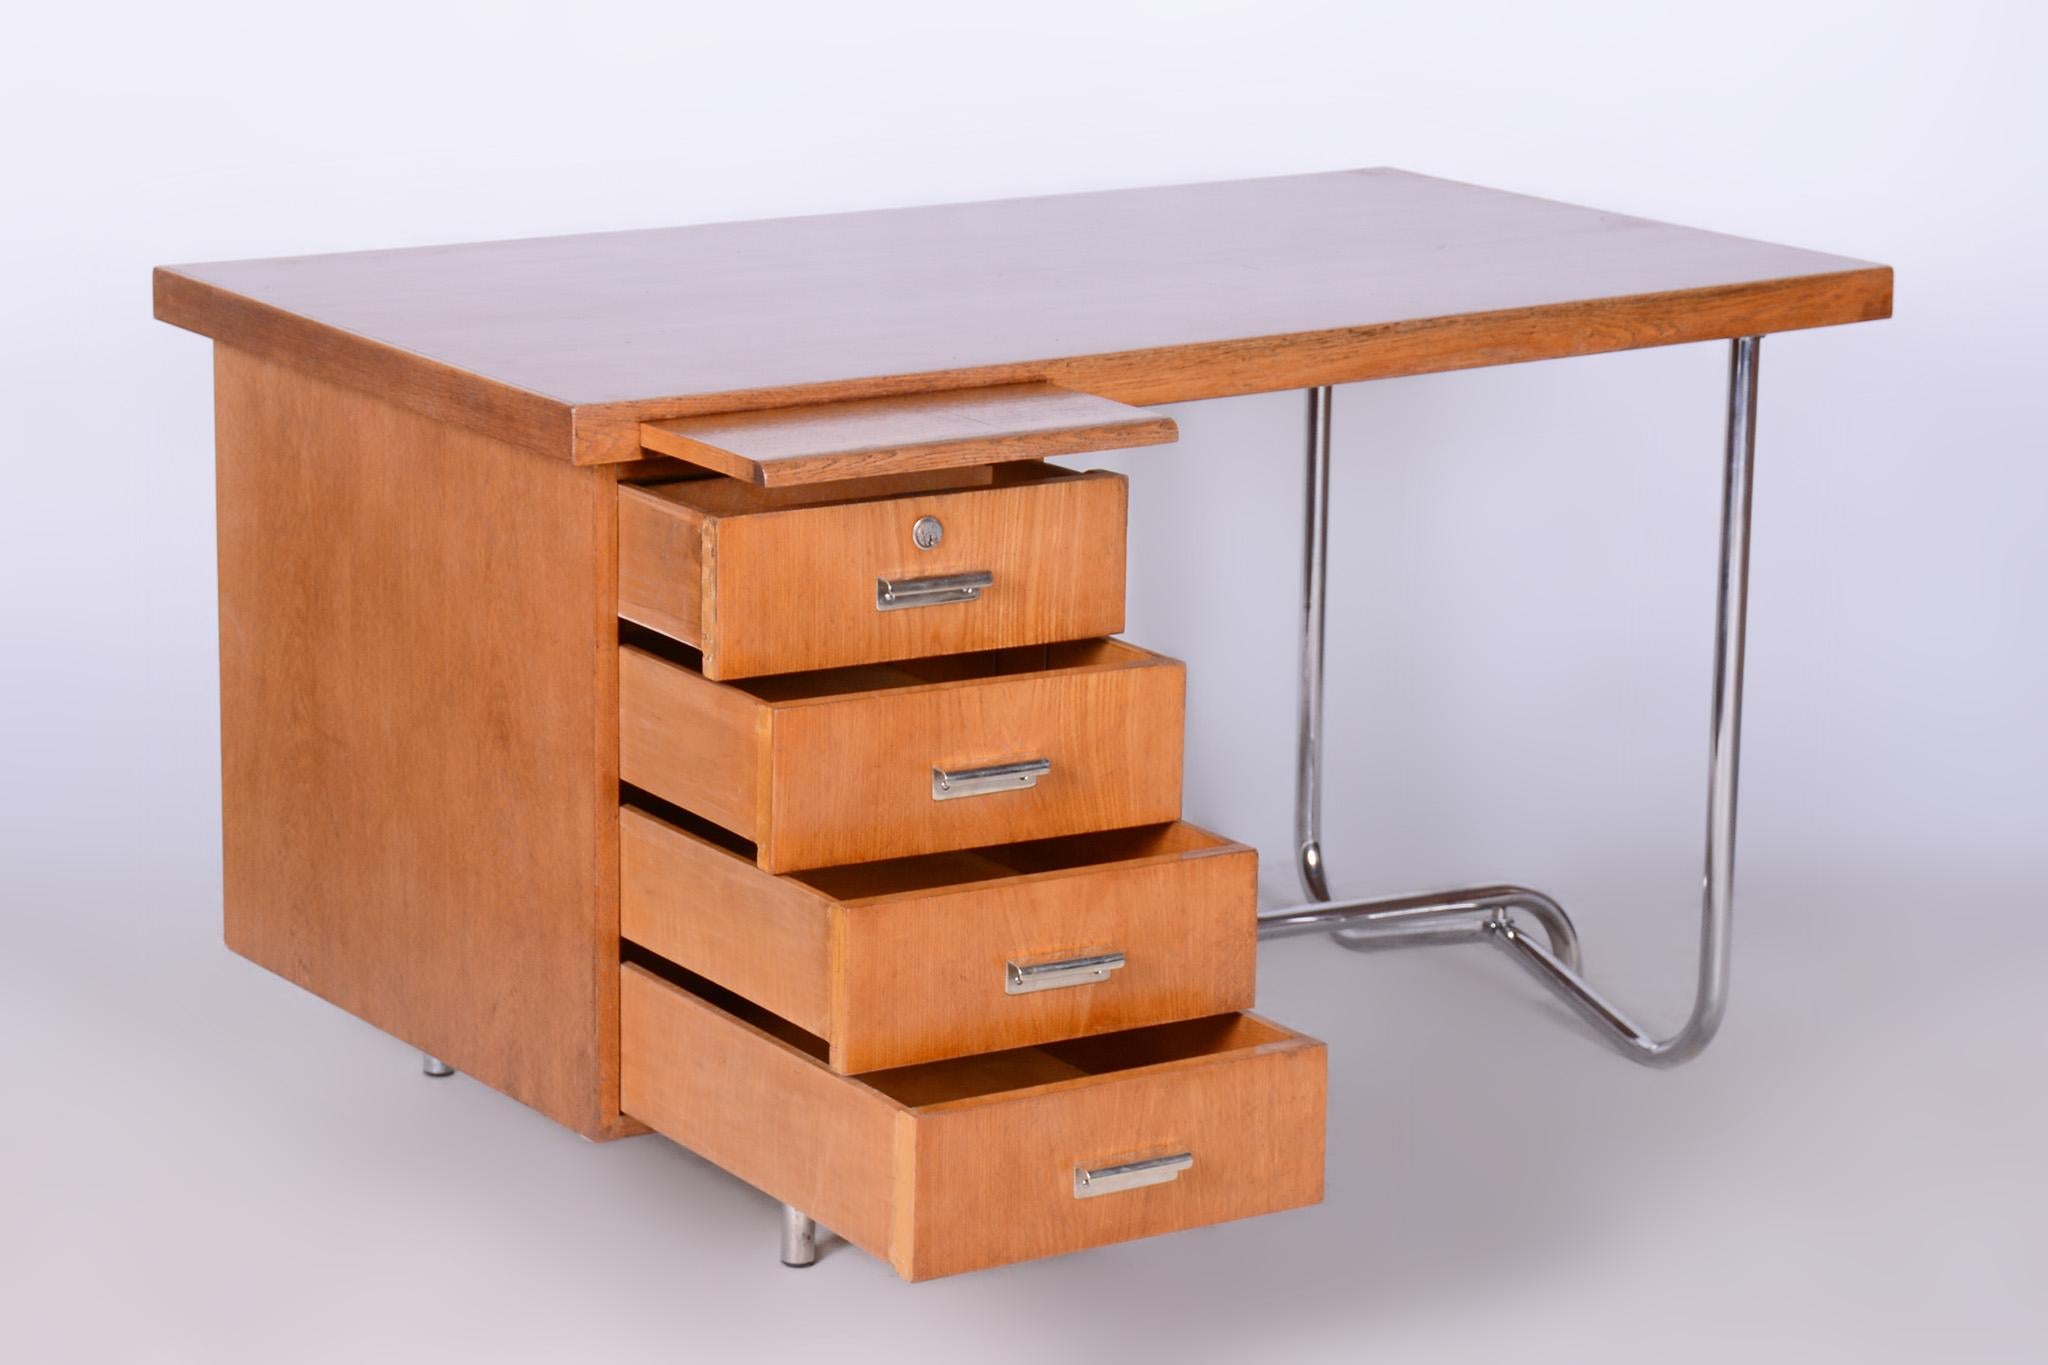 Metal Restored Pair of Oak Writing Desks, Hynek Gottwald, Chrome, Czechia, 1930s For Sale